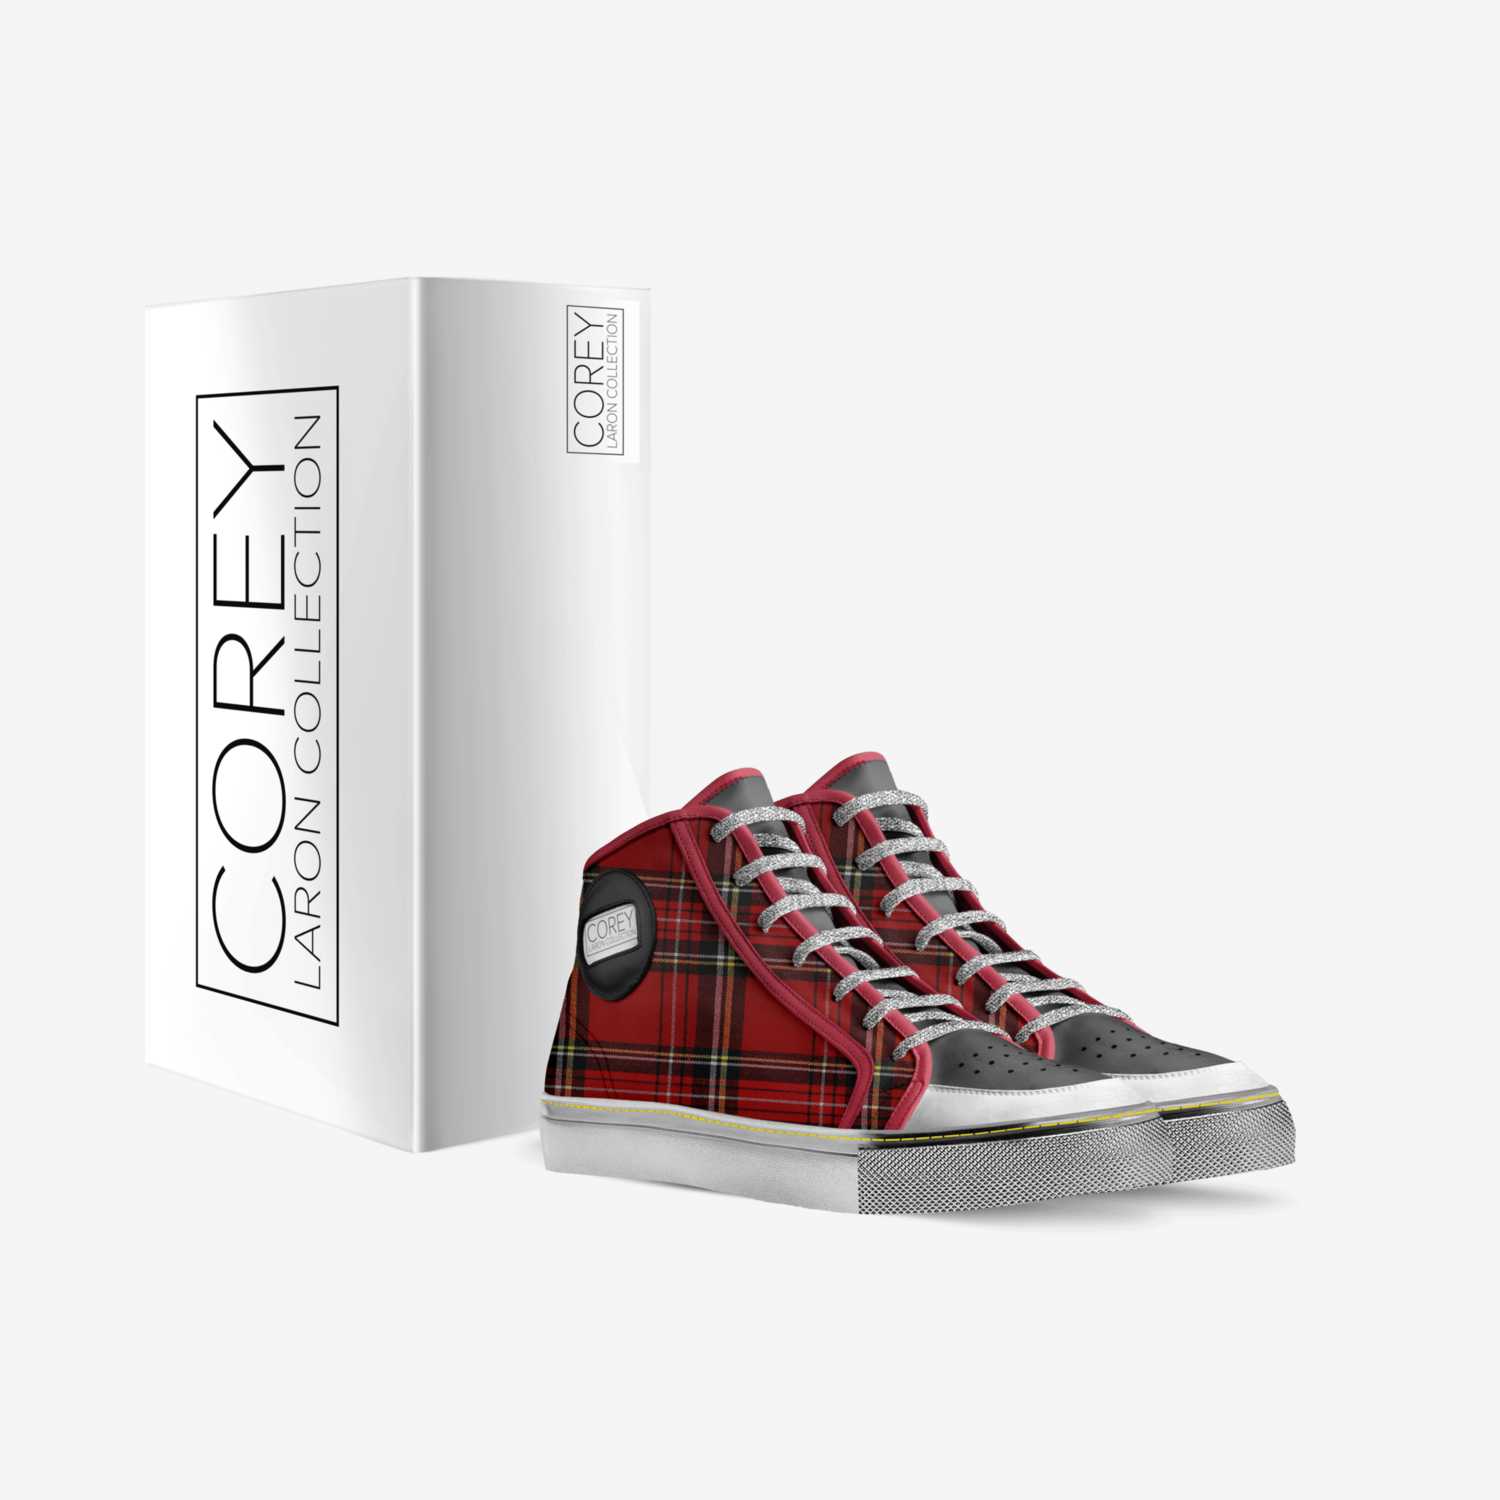 Corey Laron 3 custom made in Italy shoes by Corey Laron Hoskins Jr | Box view